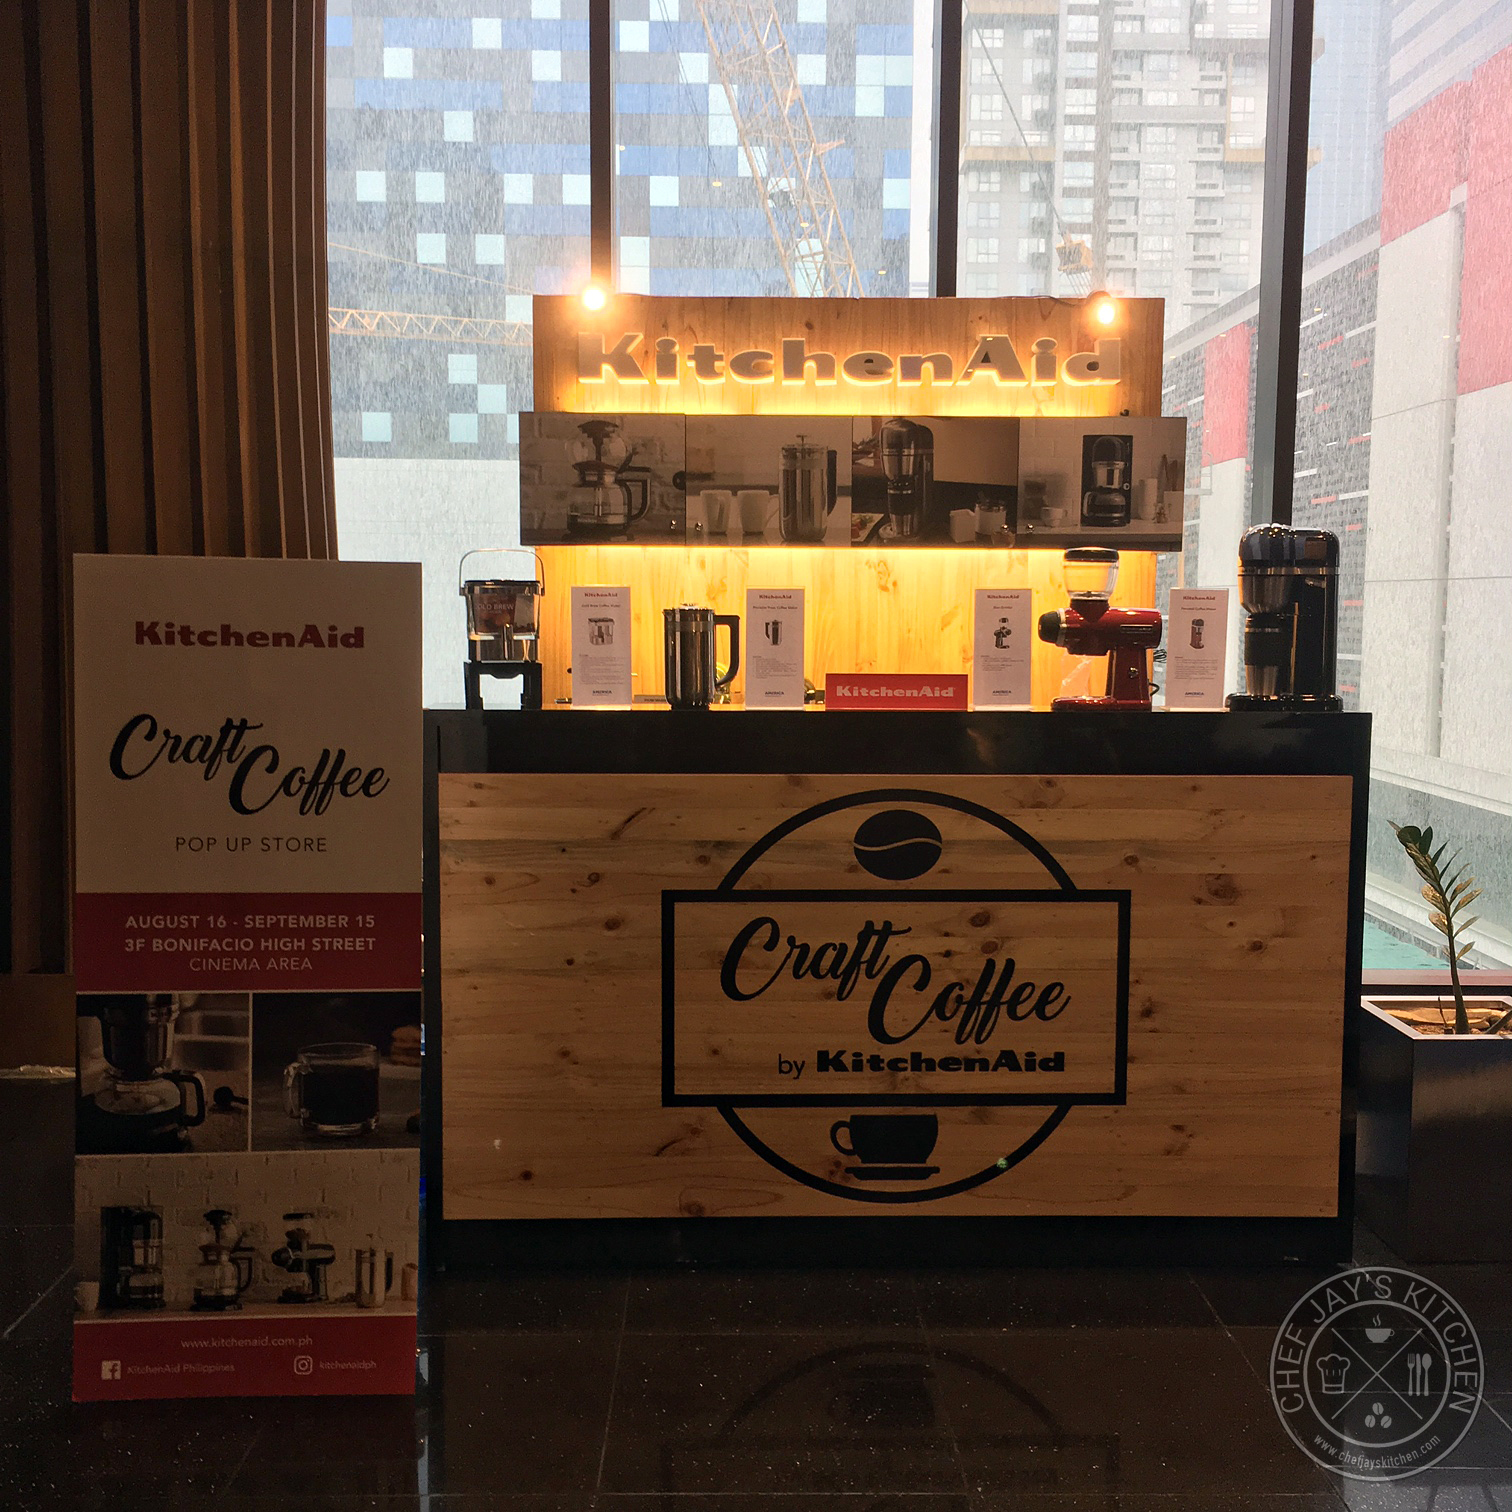 Civilian - Instant Craft Coffee - Civil Coffee Store